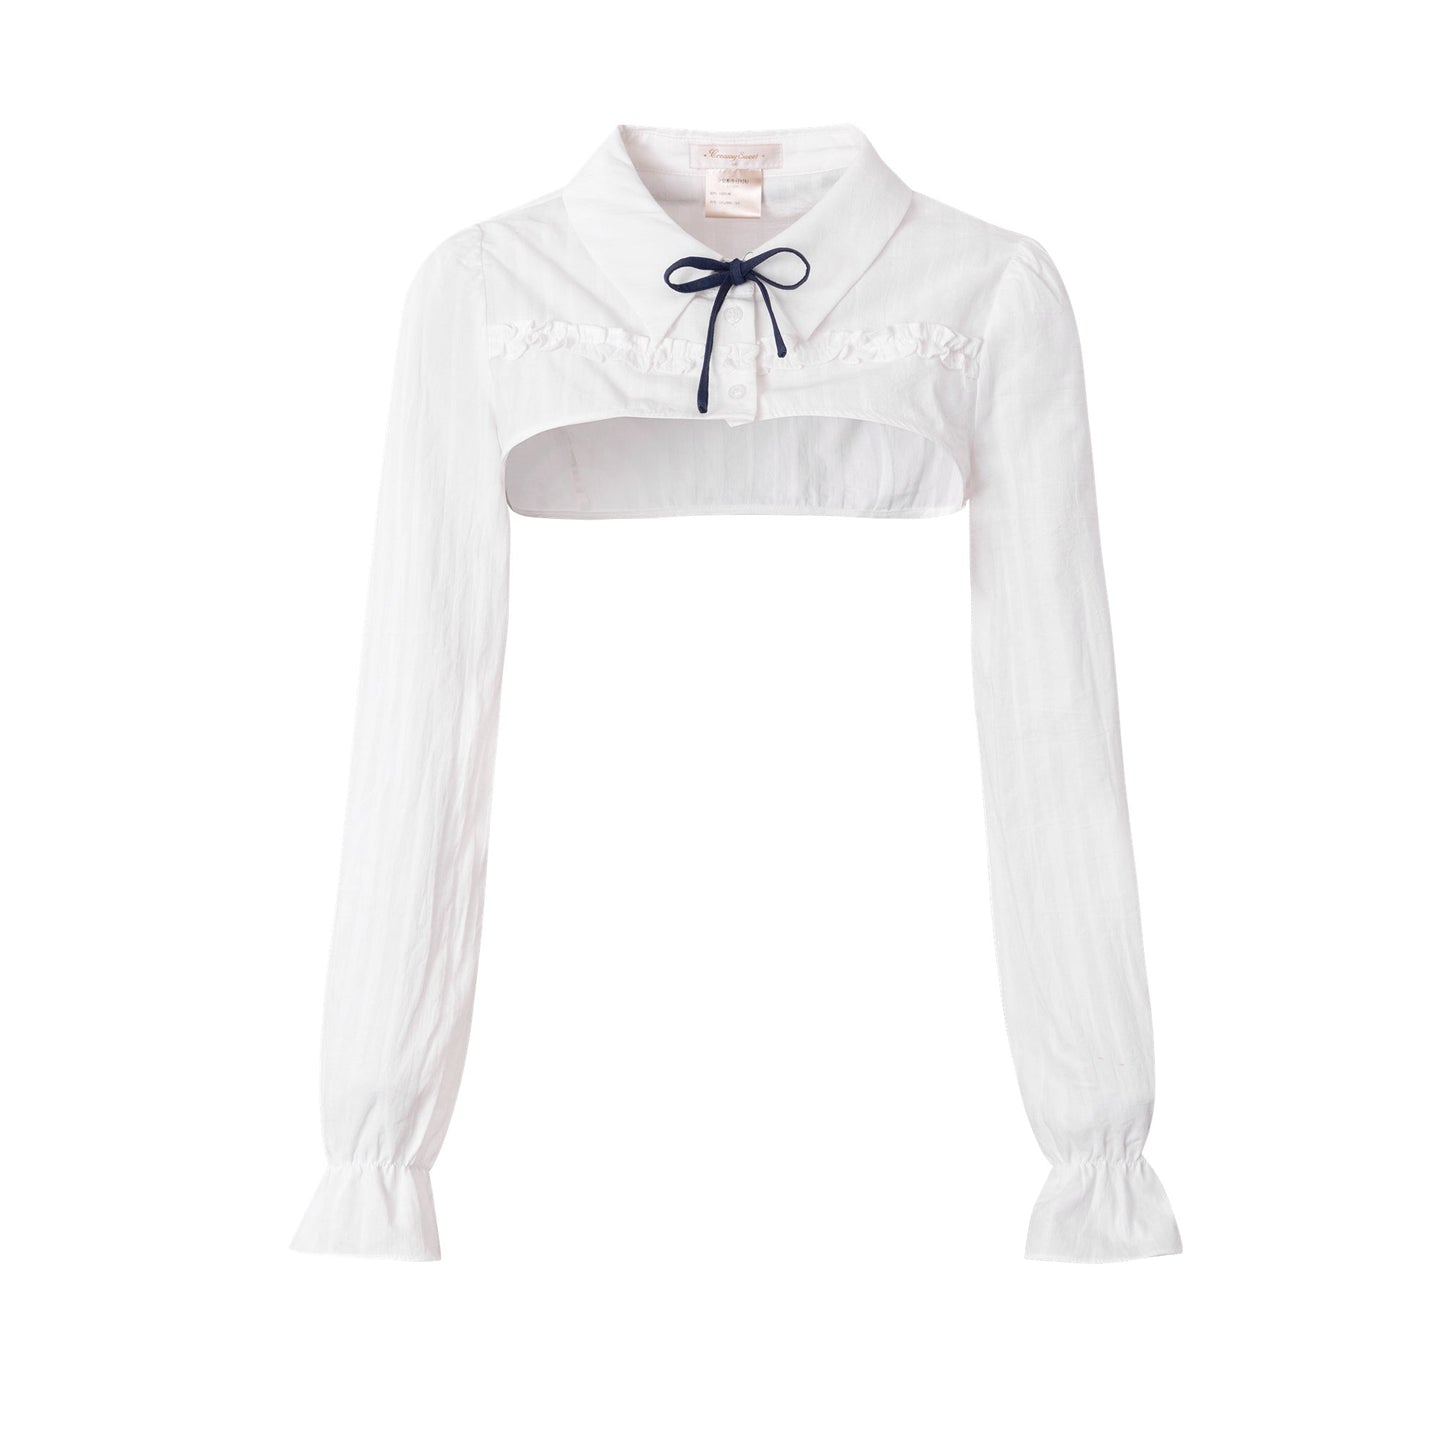 Girly White Blouse Shirt Denim Suspenders Cart